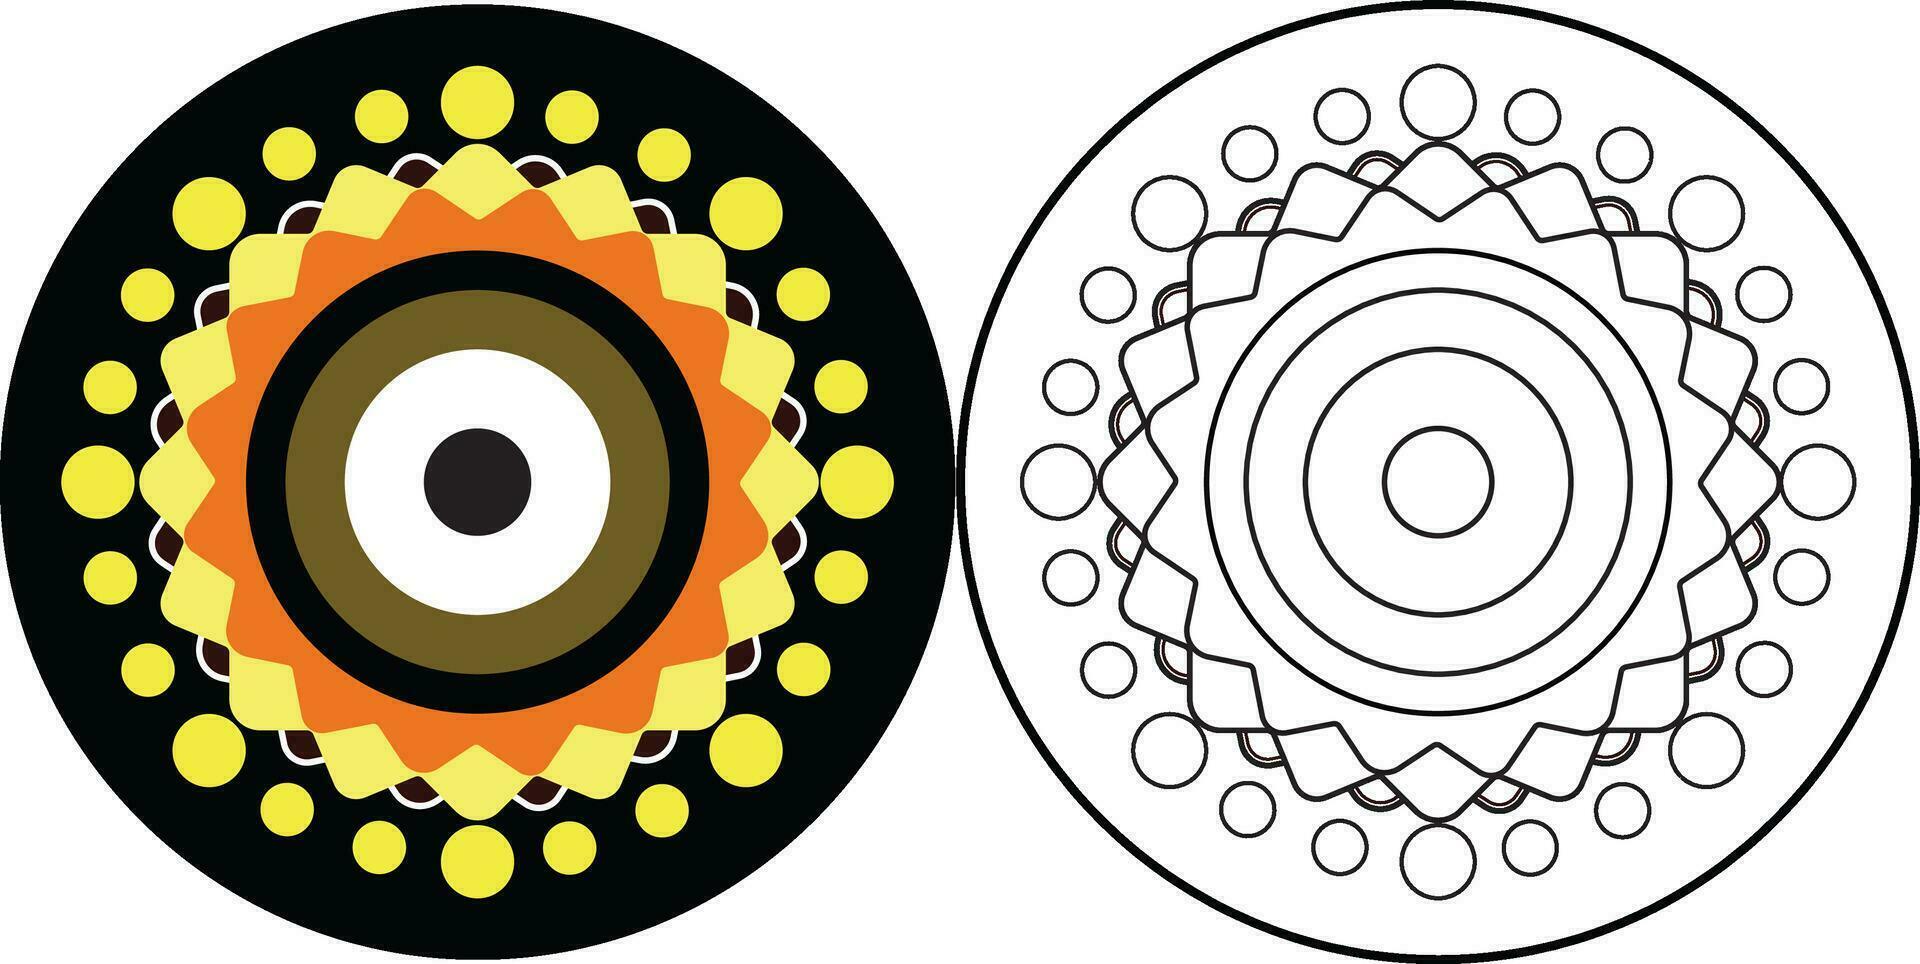 circle pattern design illustration vector art